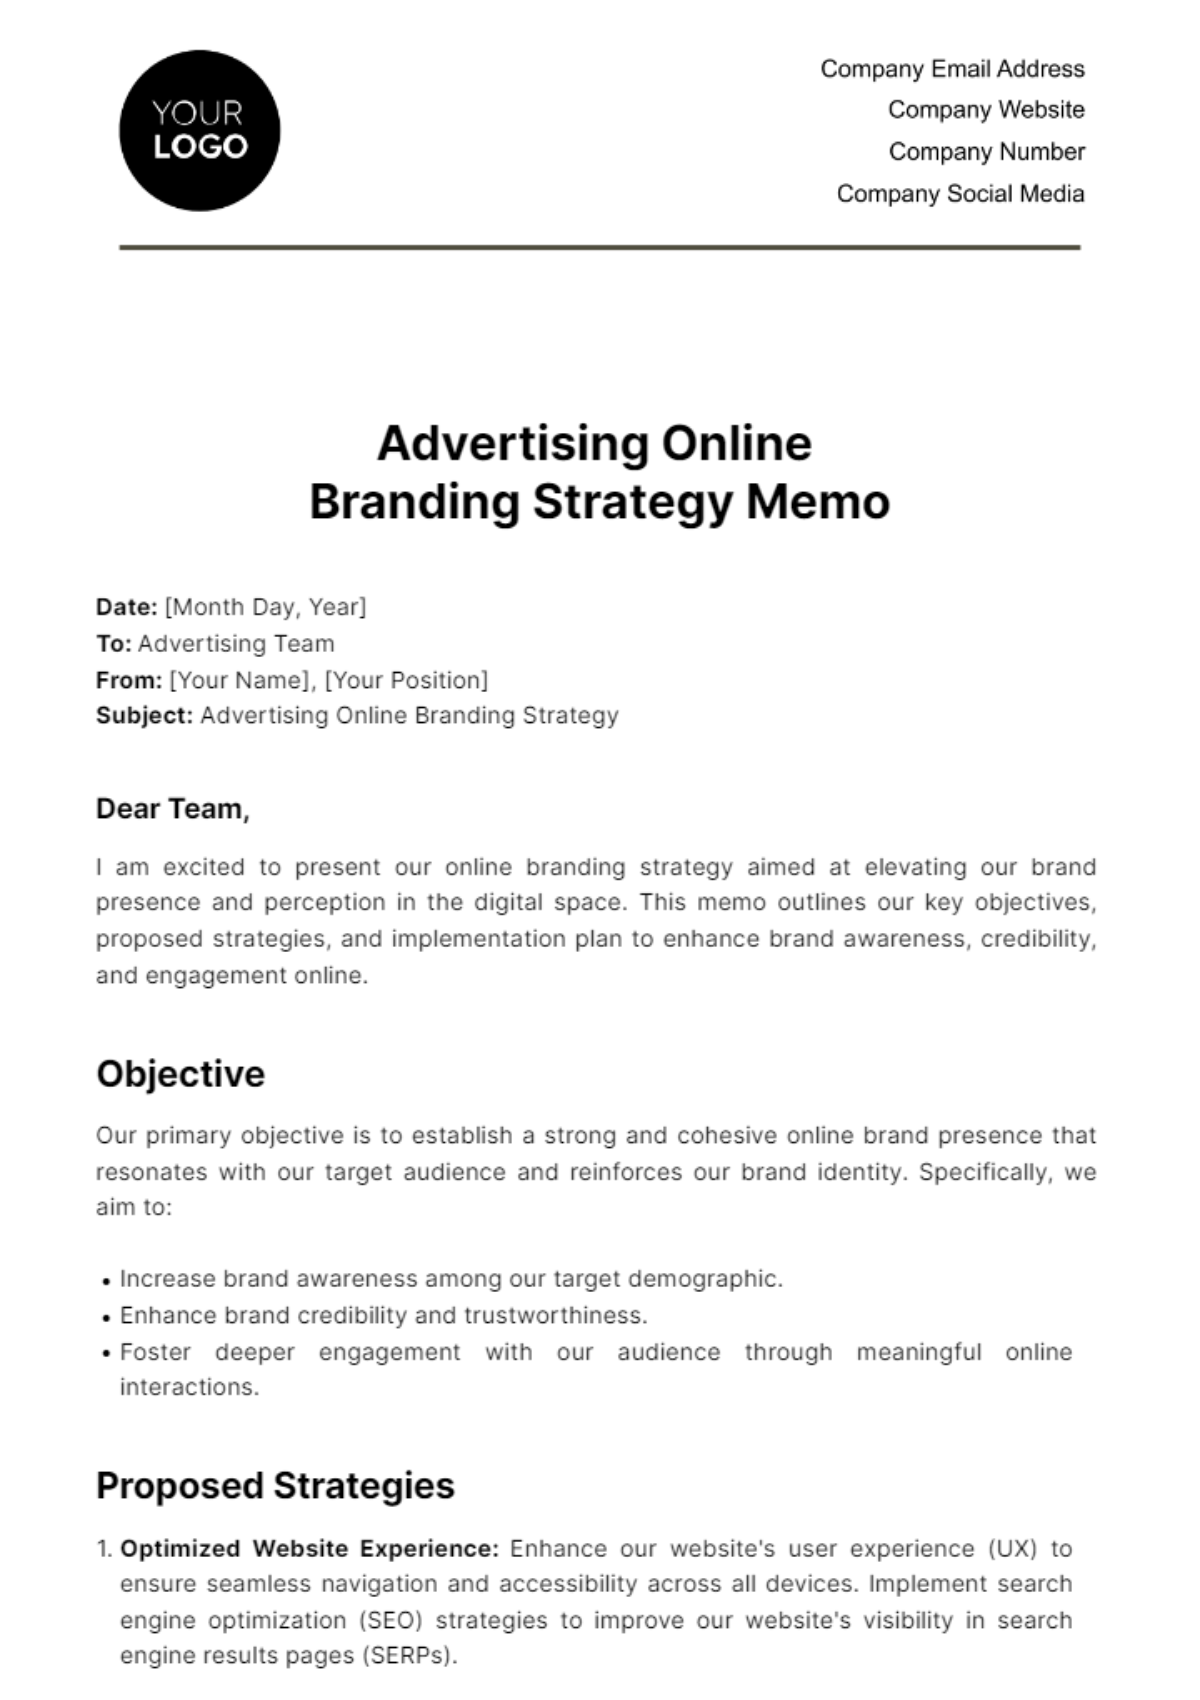 Advertising Online Branding Strategy Memo Template